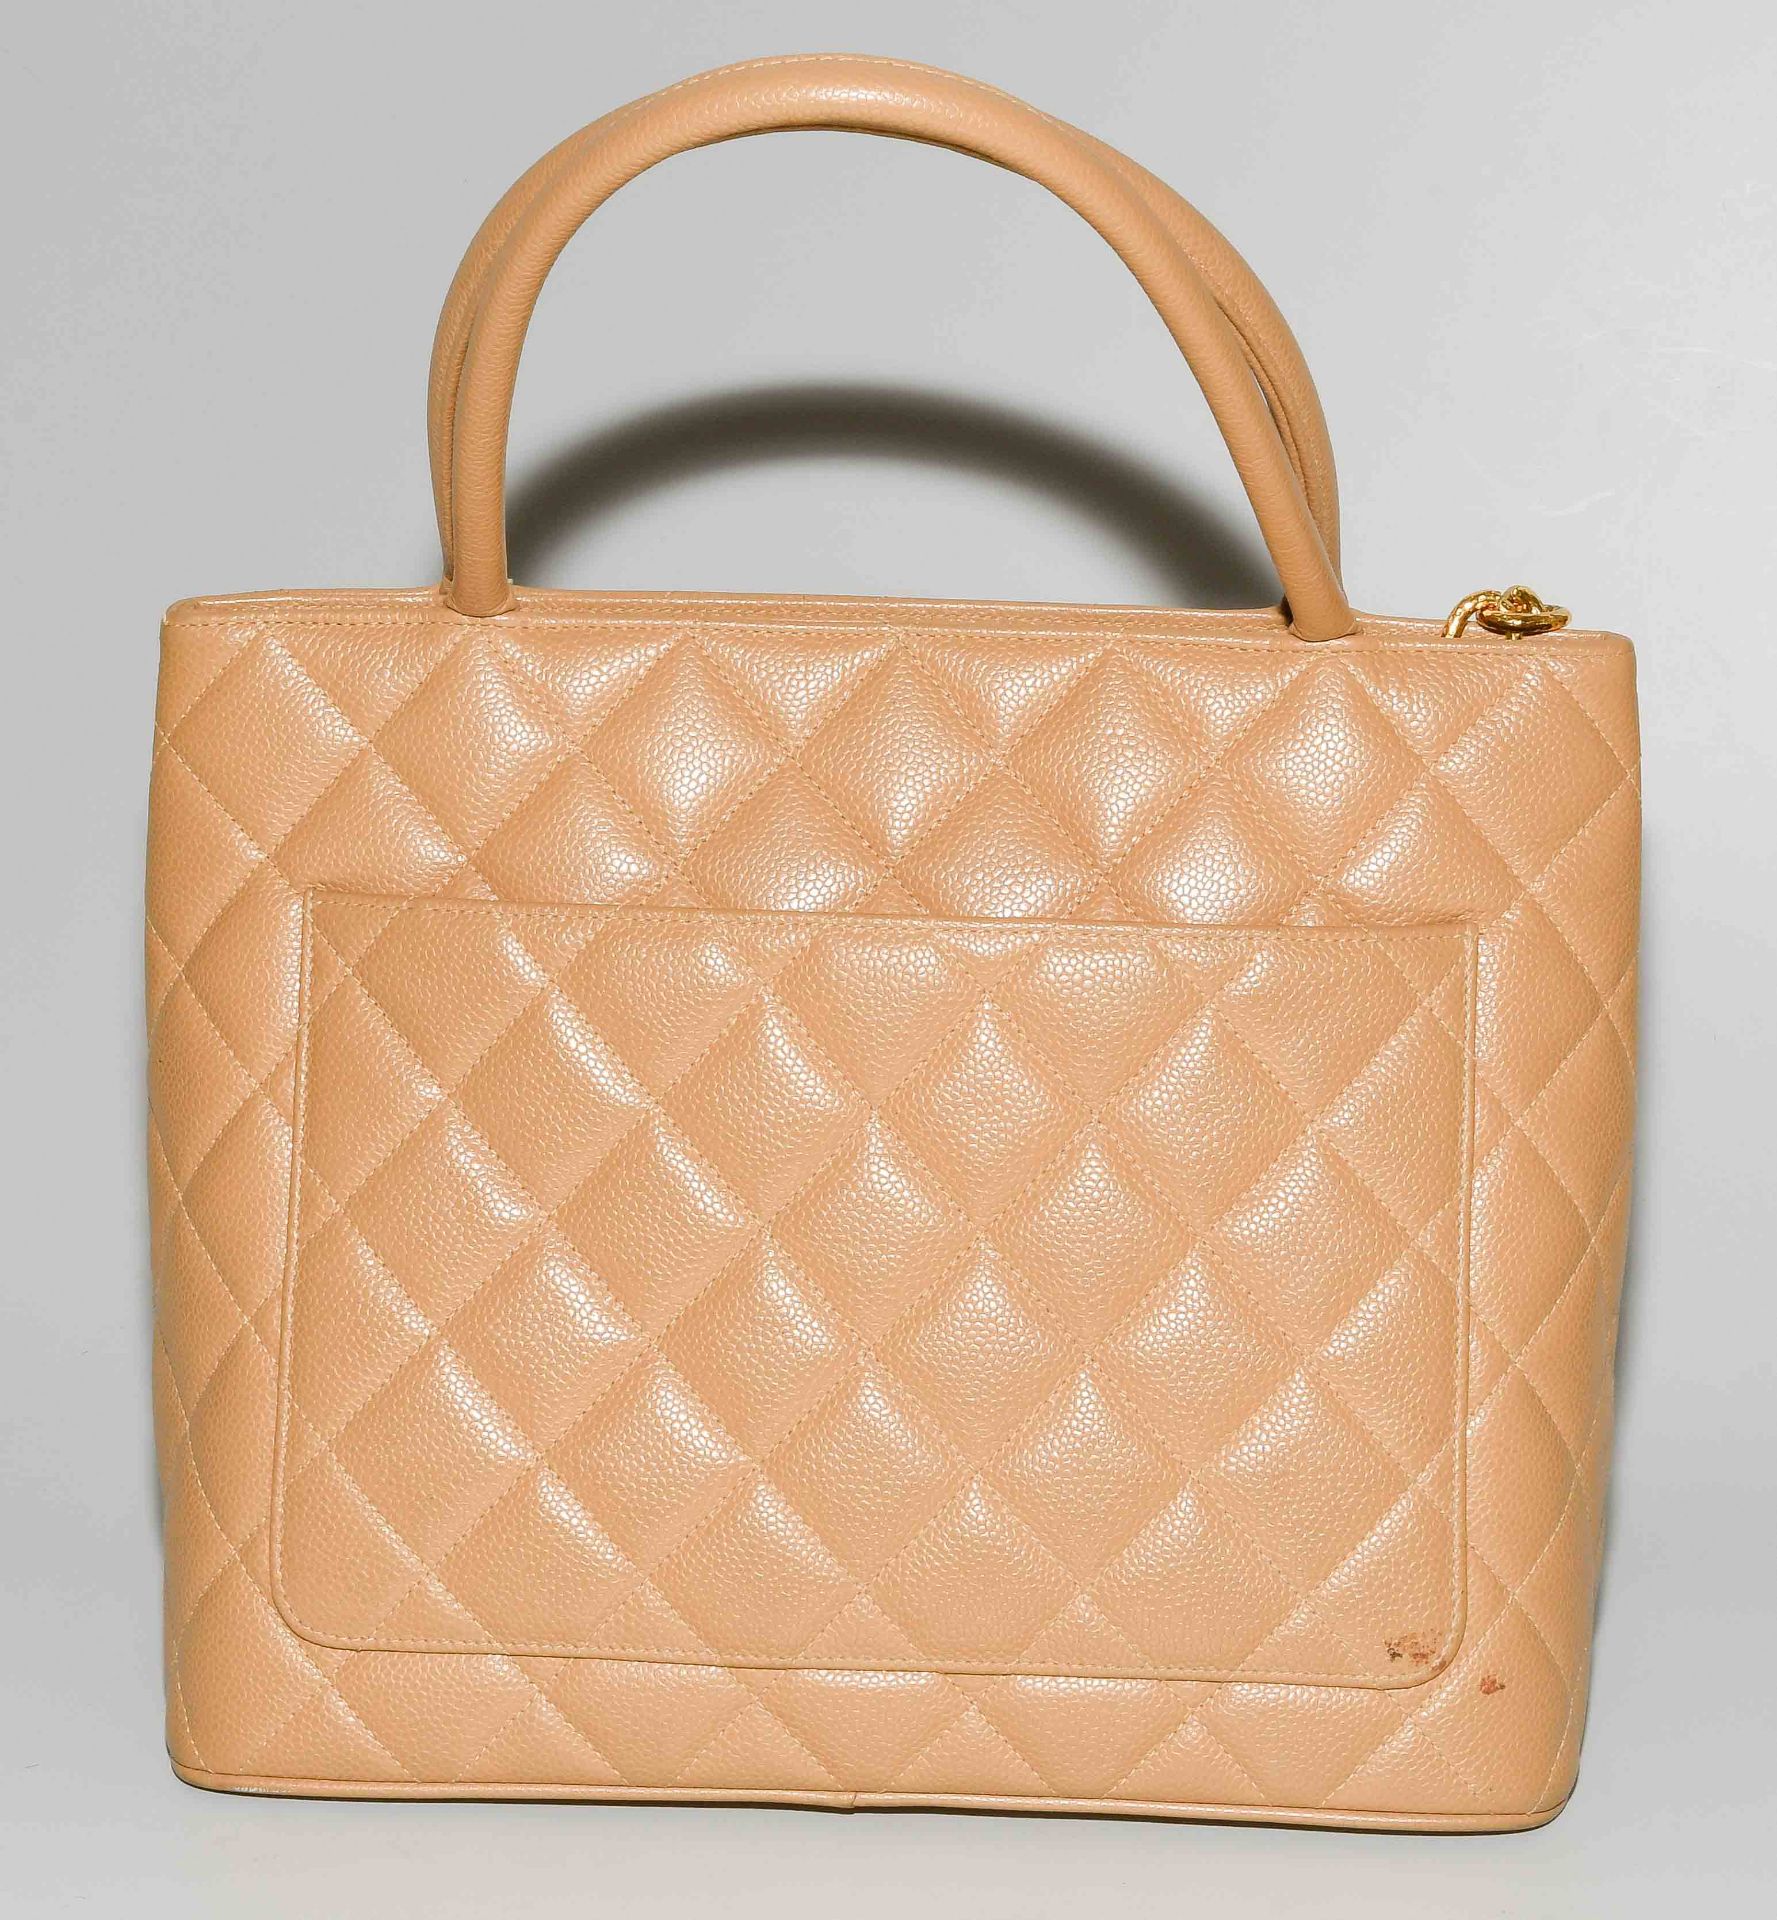 Chanel, Handtasche "Medaillon" - Image 4 of 10